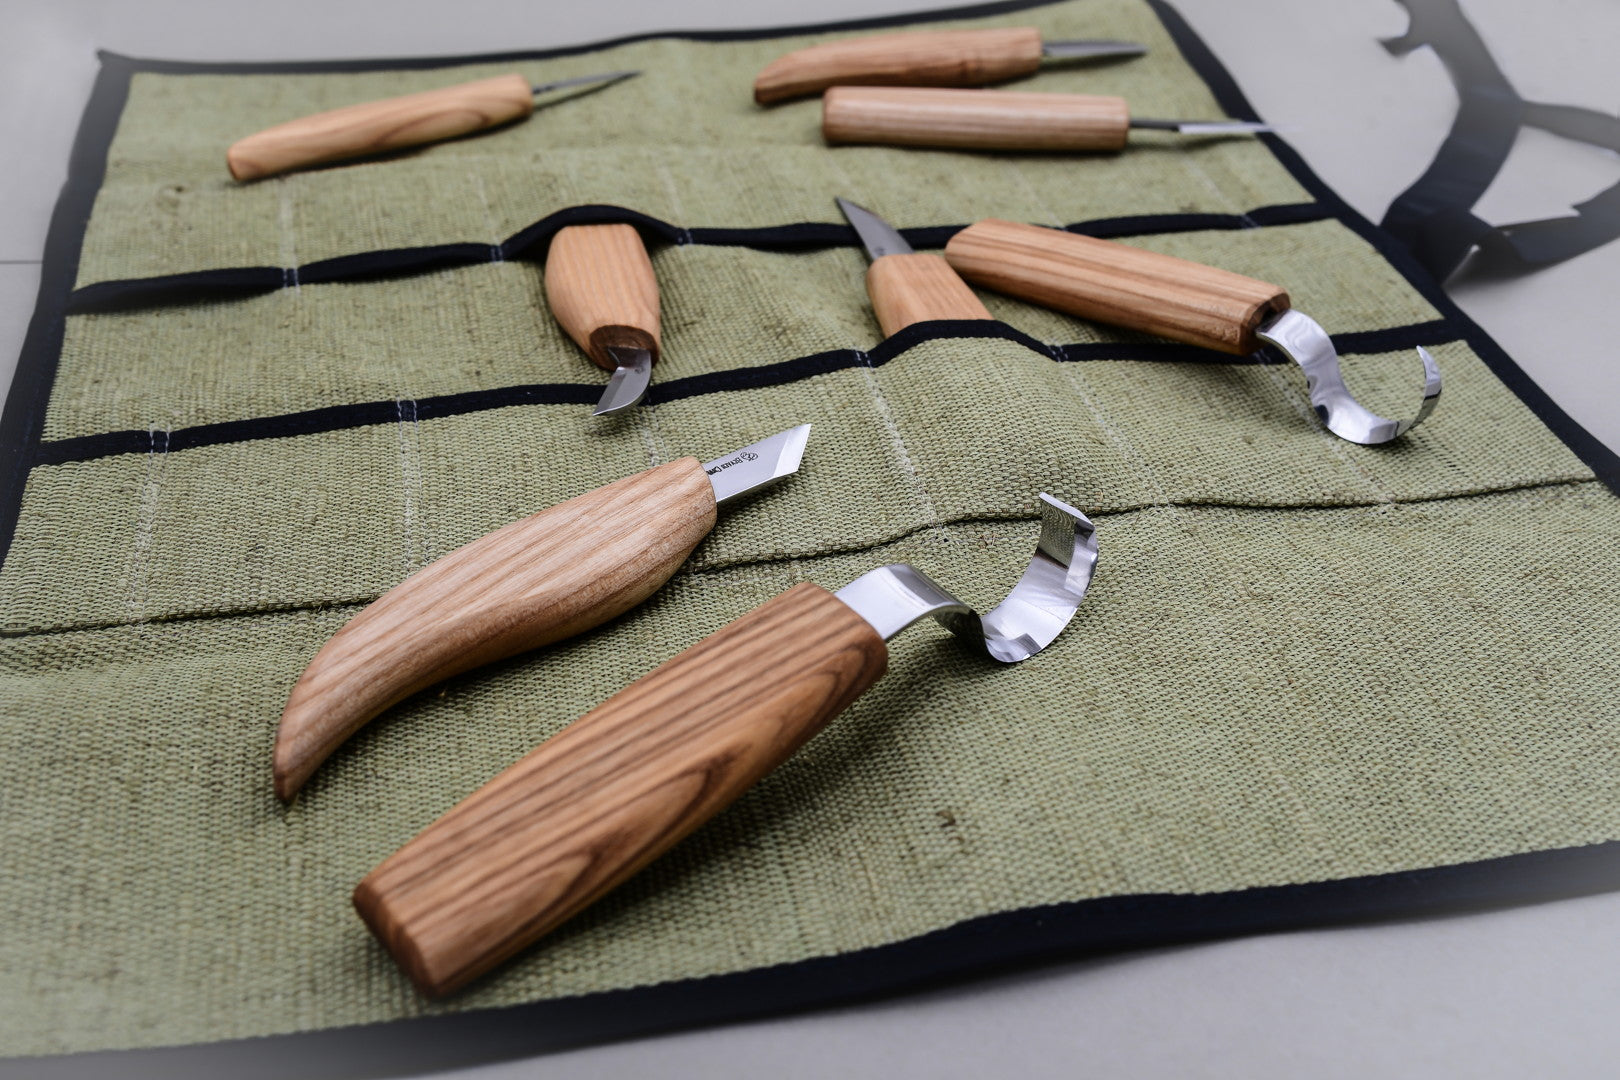 BeaverCraft Wood Carving Detail Knife C8 1.5 inch Whittling Knife for Detail Wood Carving Craft Knife - Chip Carving Knife Wood Carving Tools for